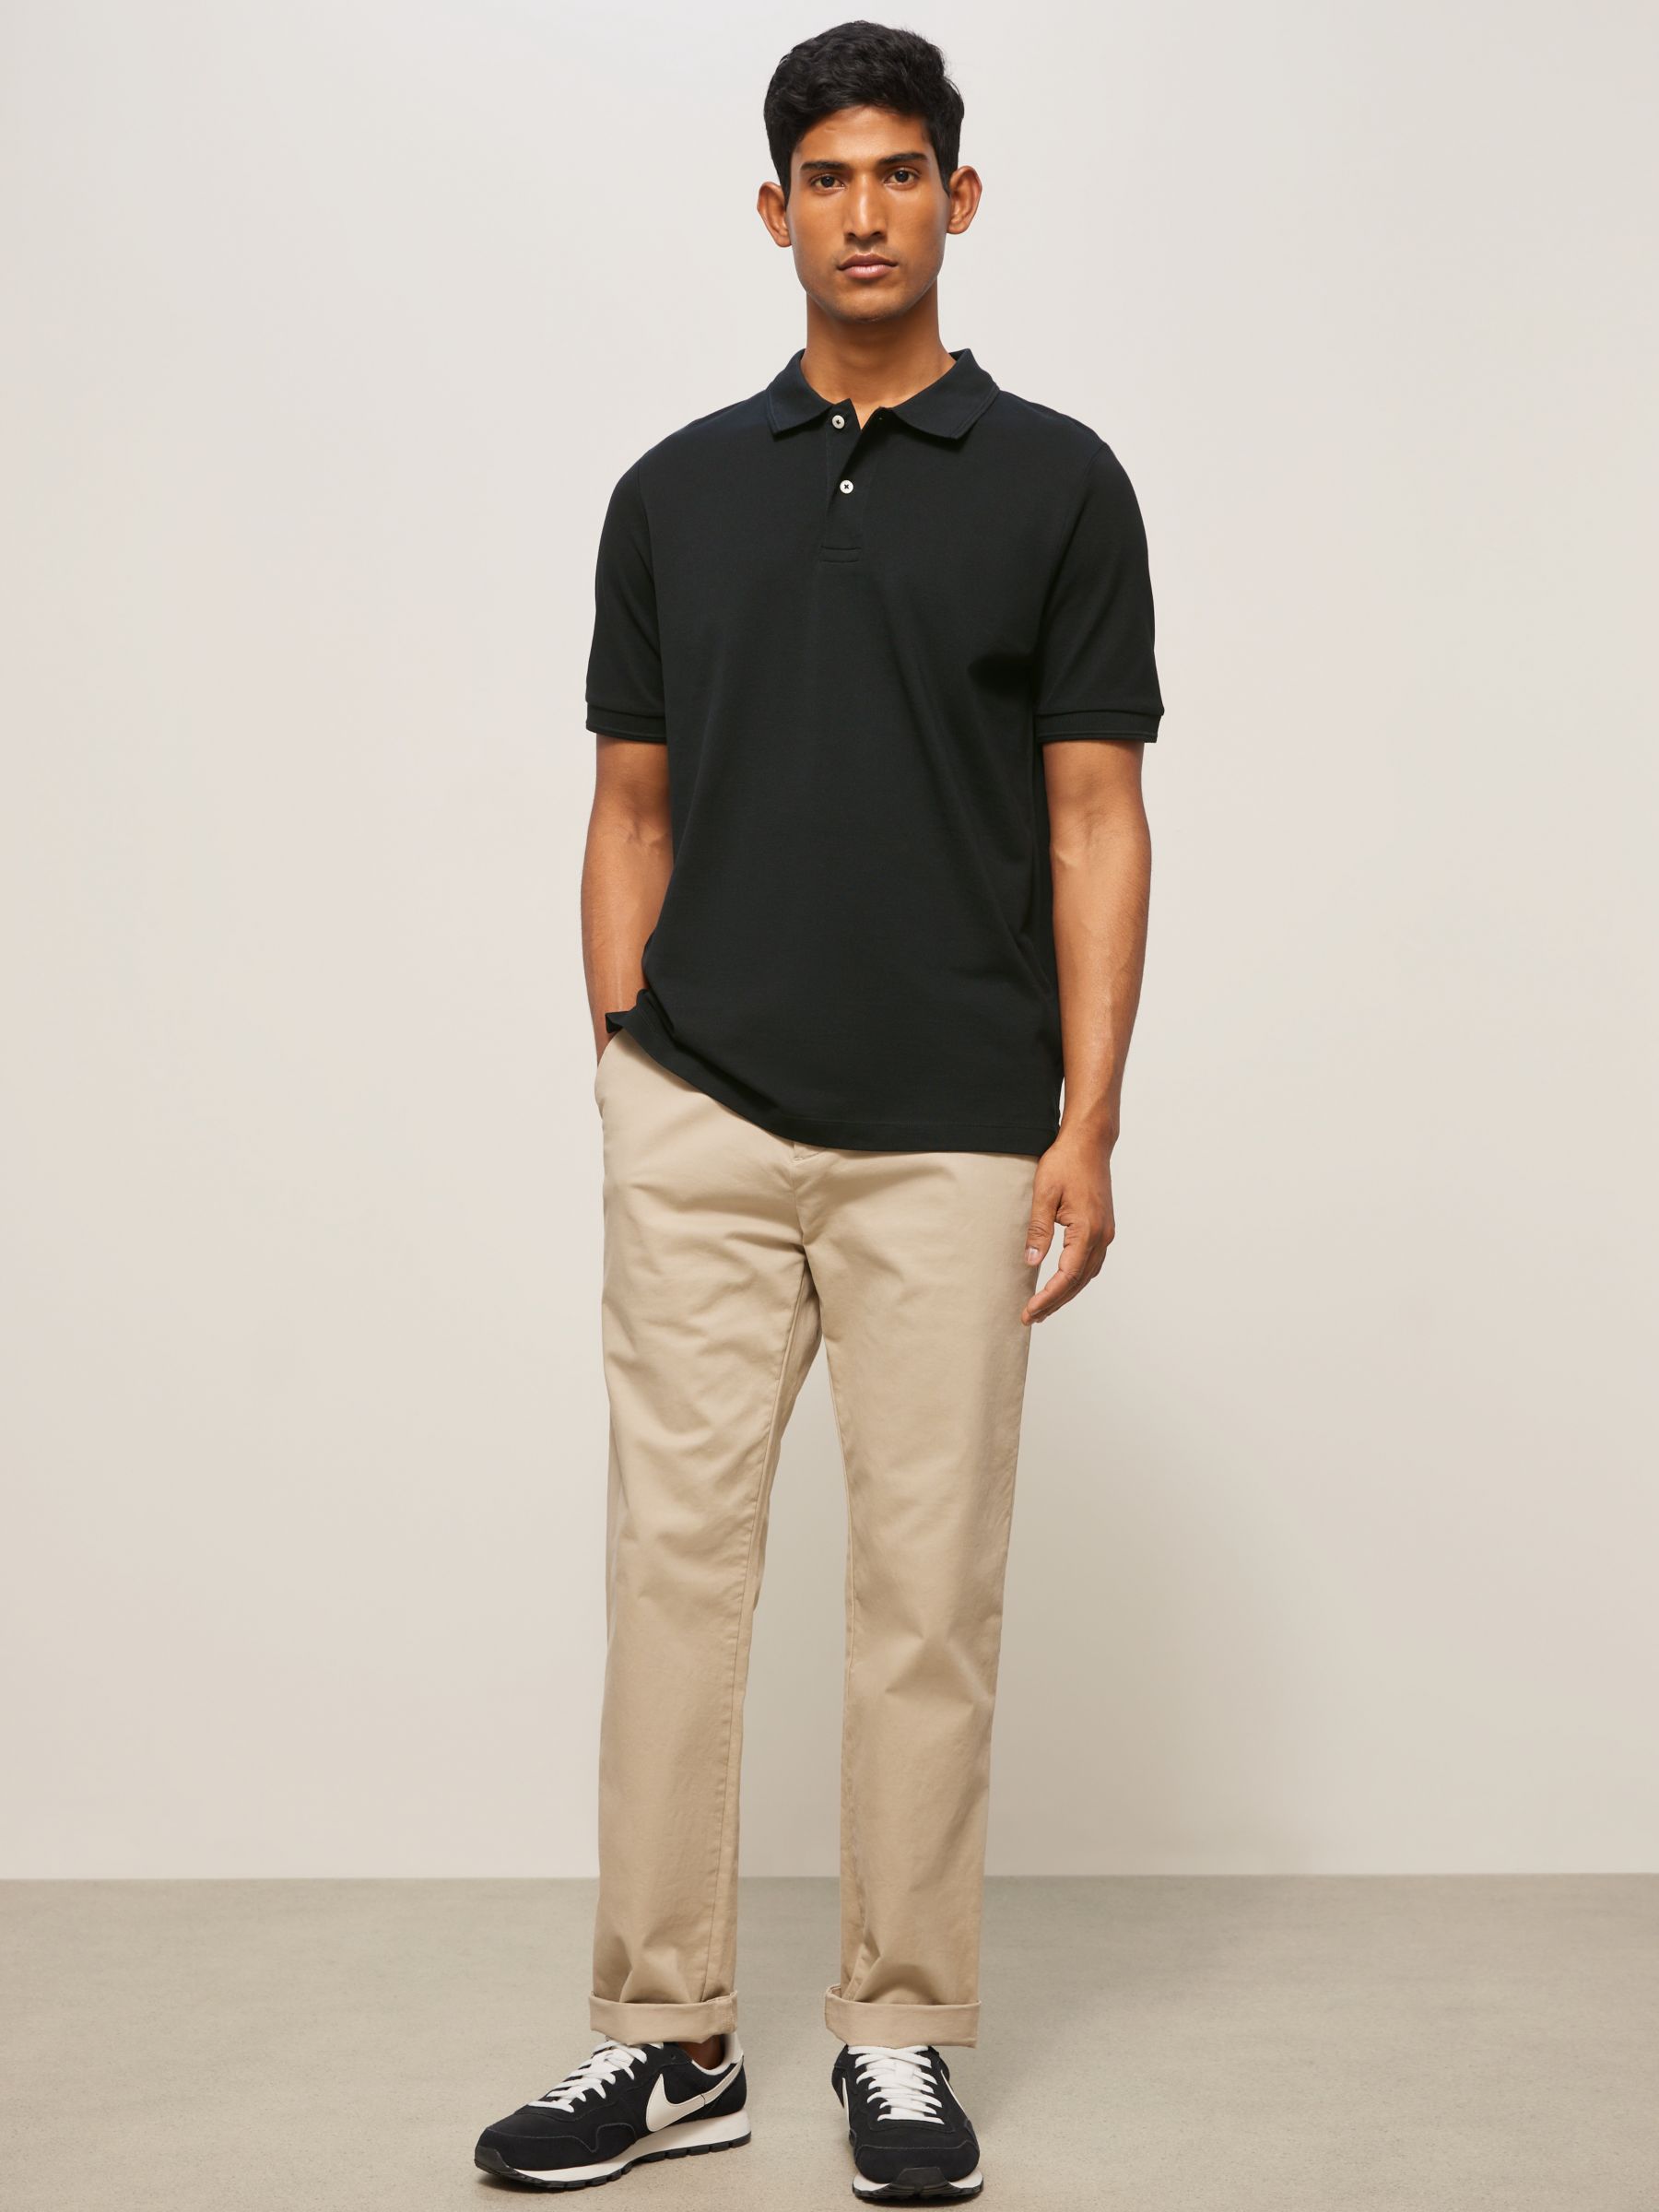 John Lewis Supima Cotton Jersey Polo Shirt, Black, S